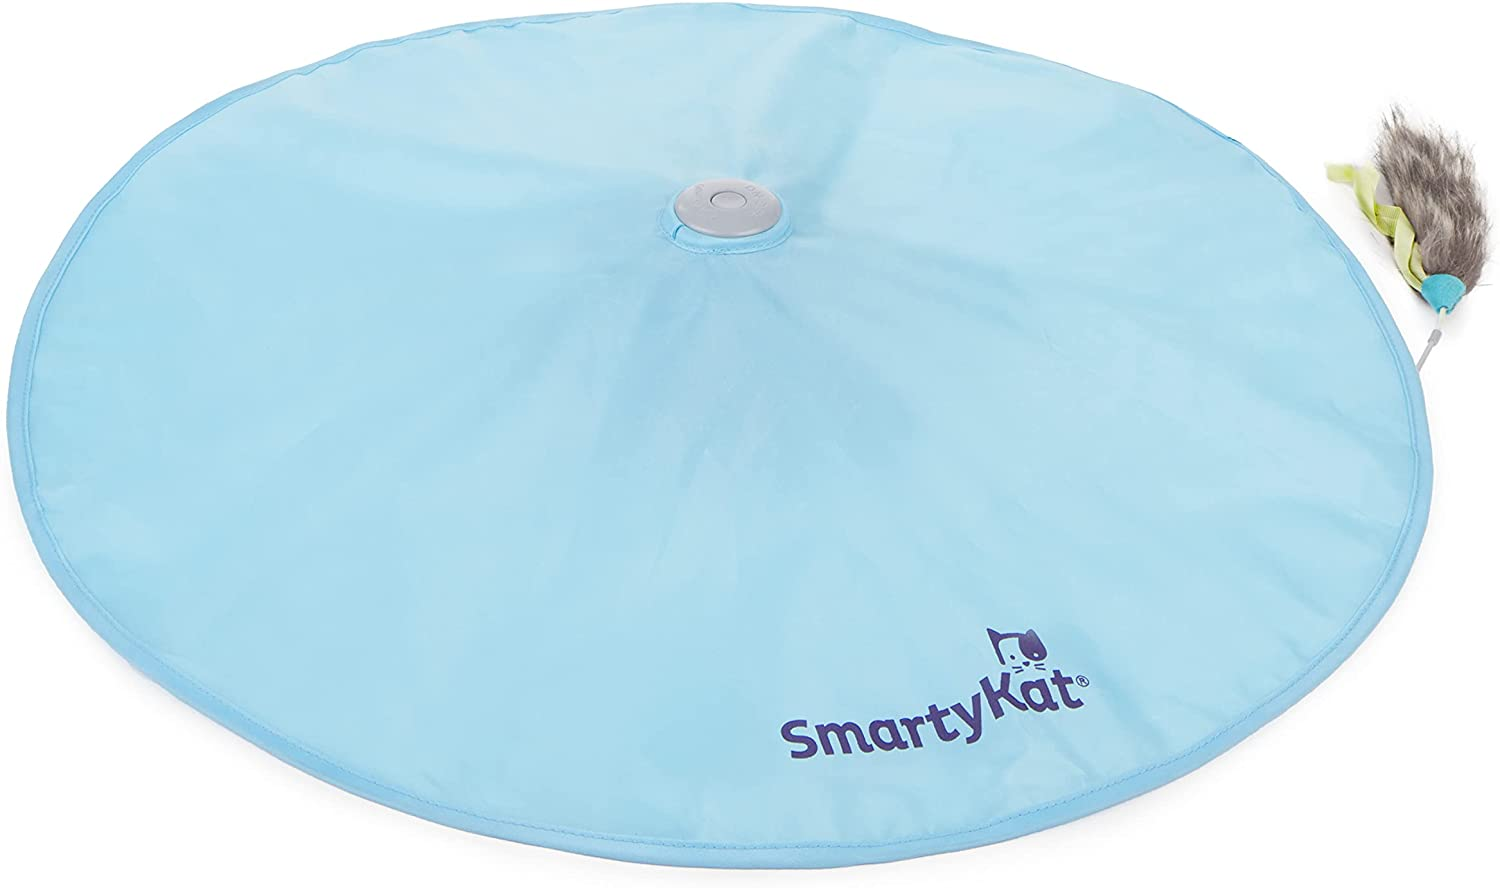 SmartyKat Hot Pursuit Cat Toy Concealed Motion Toy (Blue) $11.26